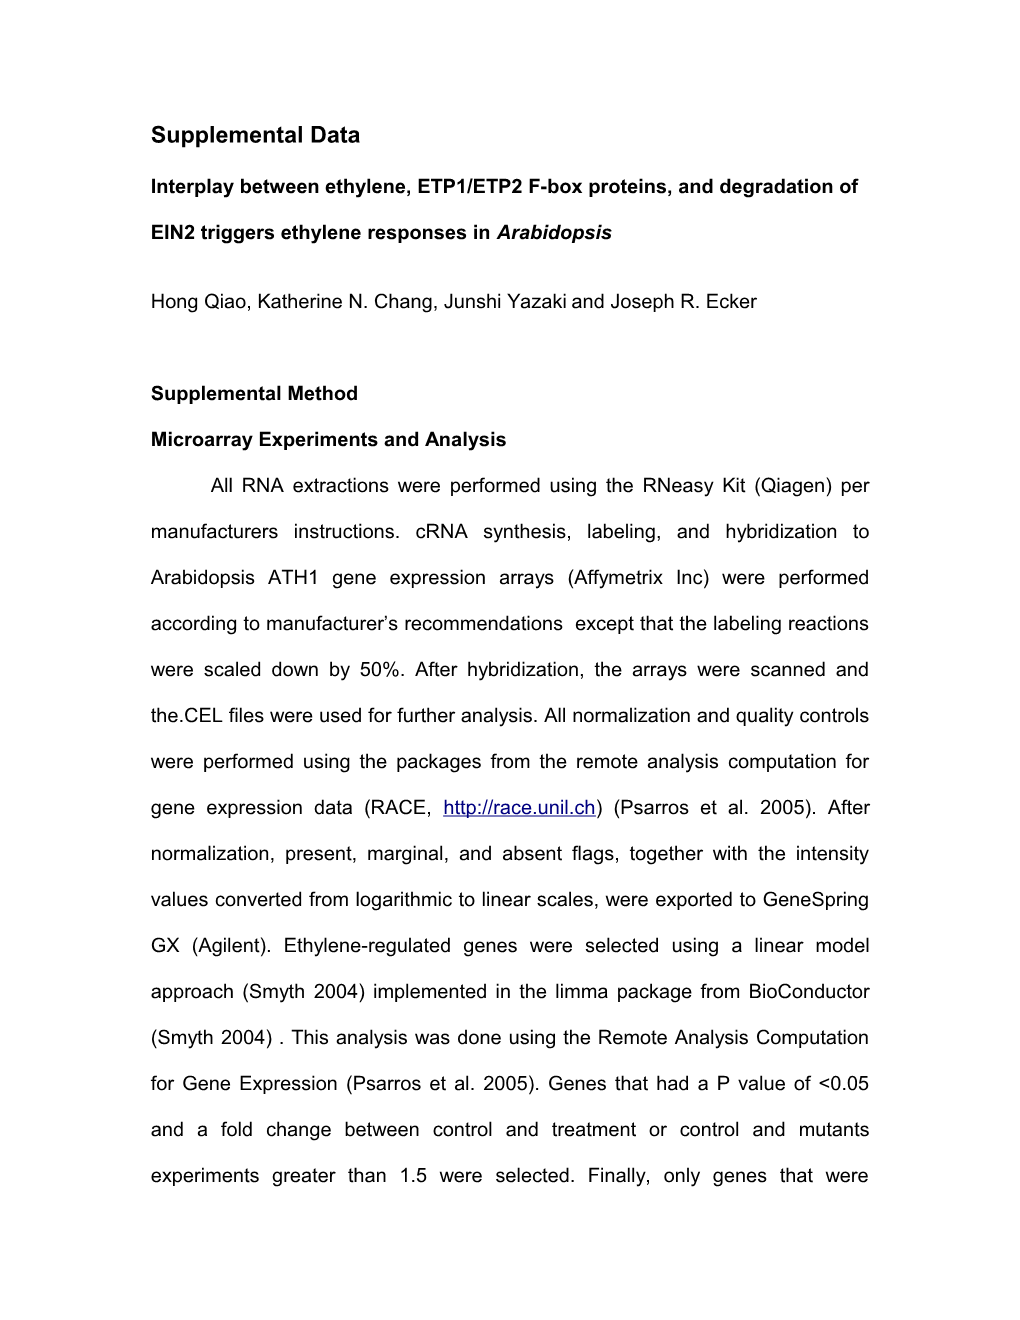 Interplay Between Ethylene, ETP1/ETP2 F-Box Proteins, and Degradation of EIN2 Triggers